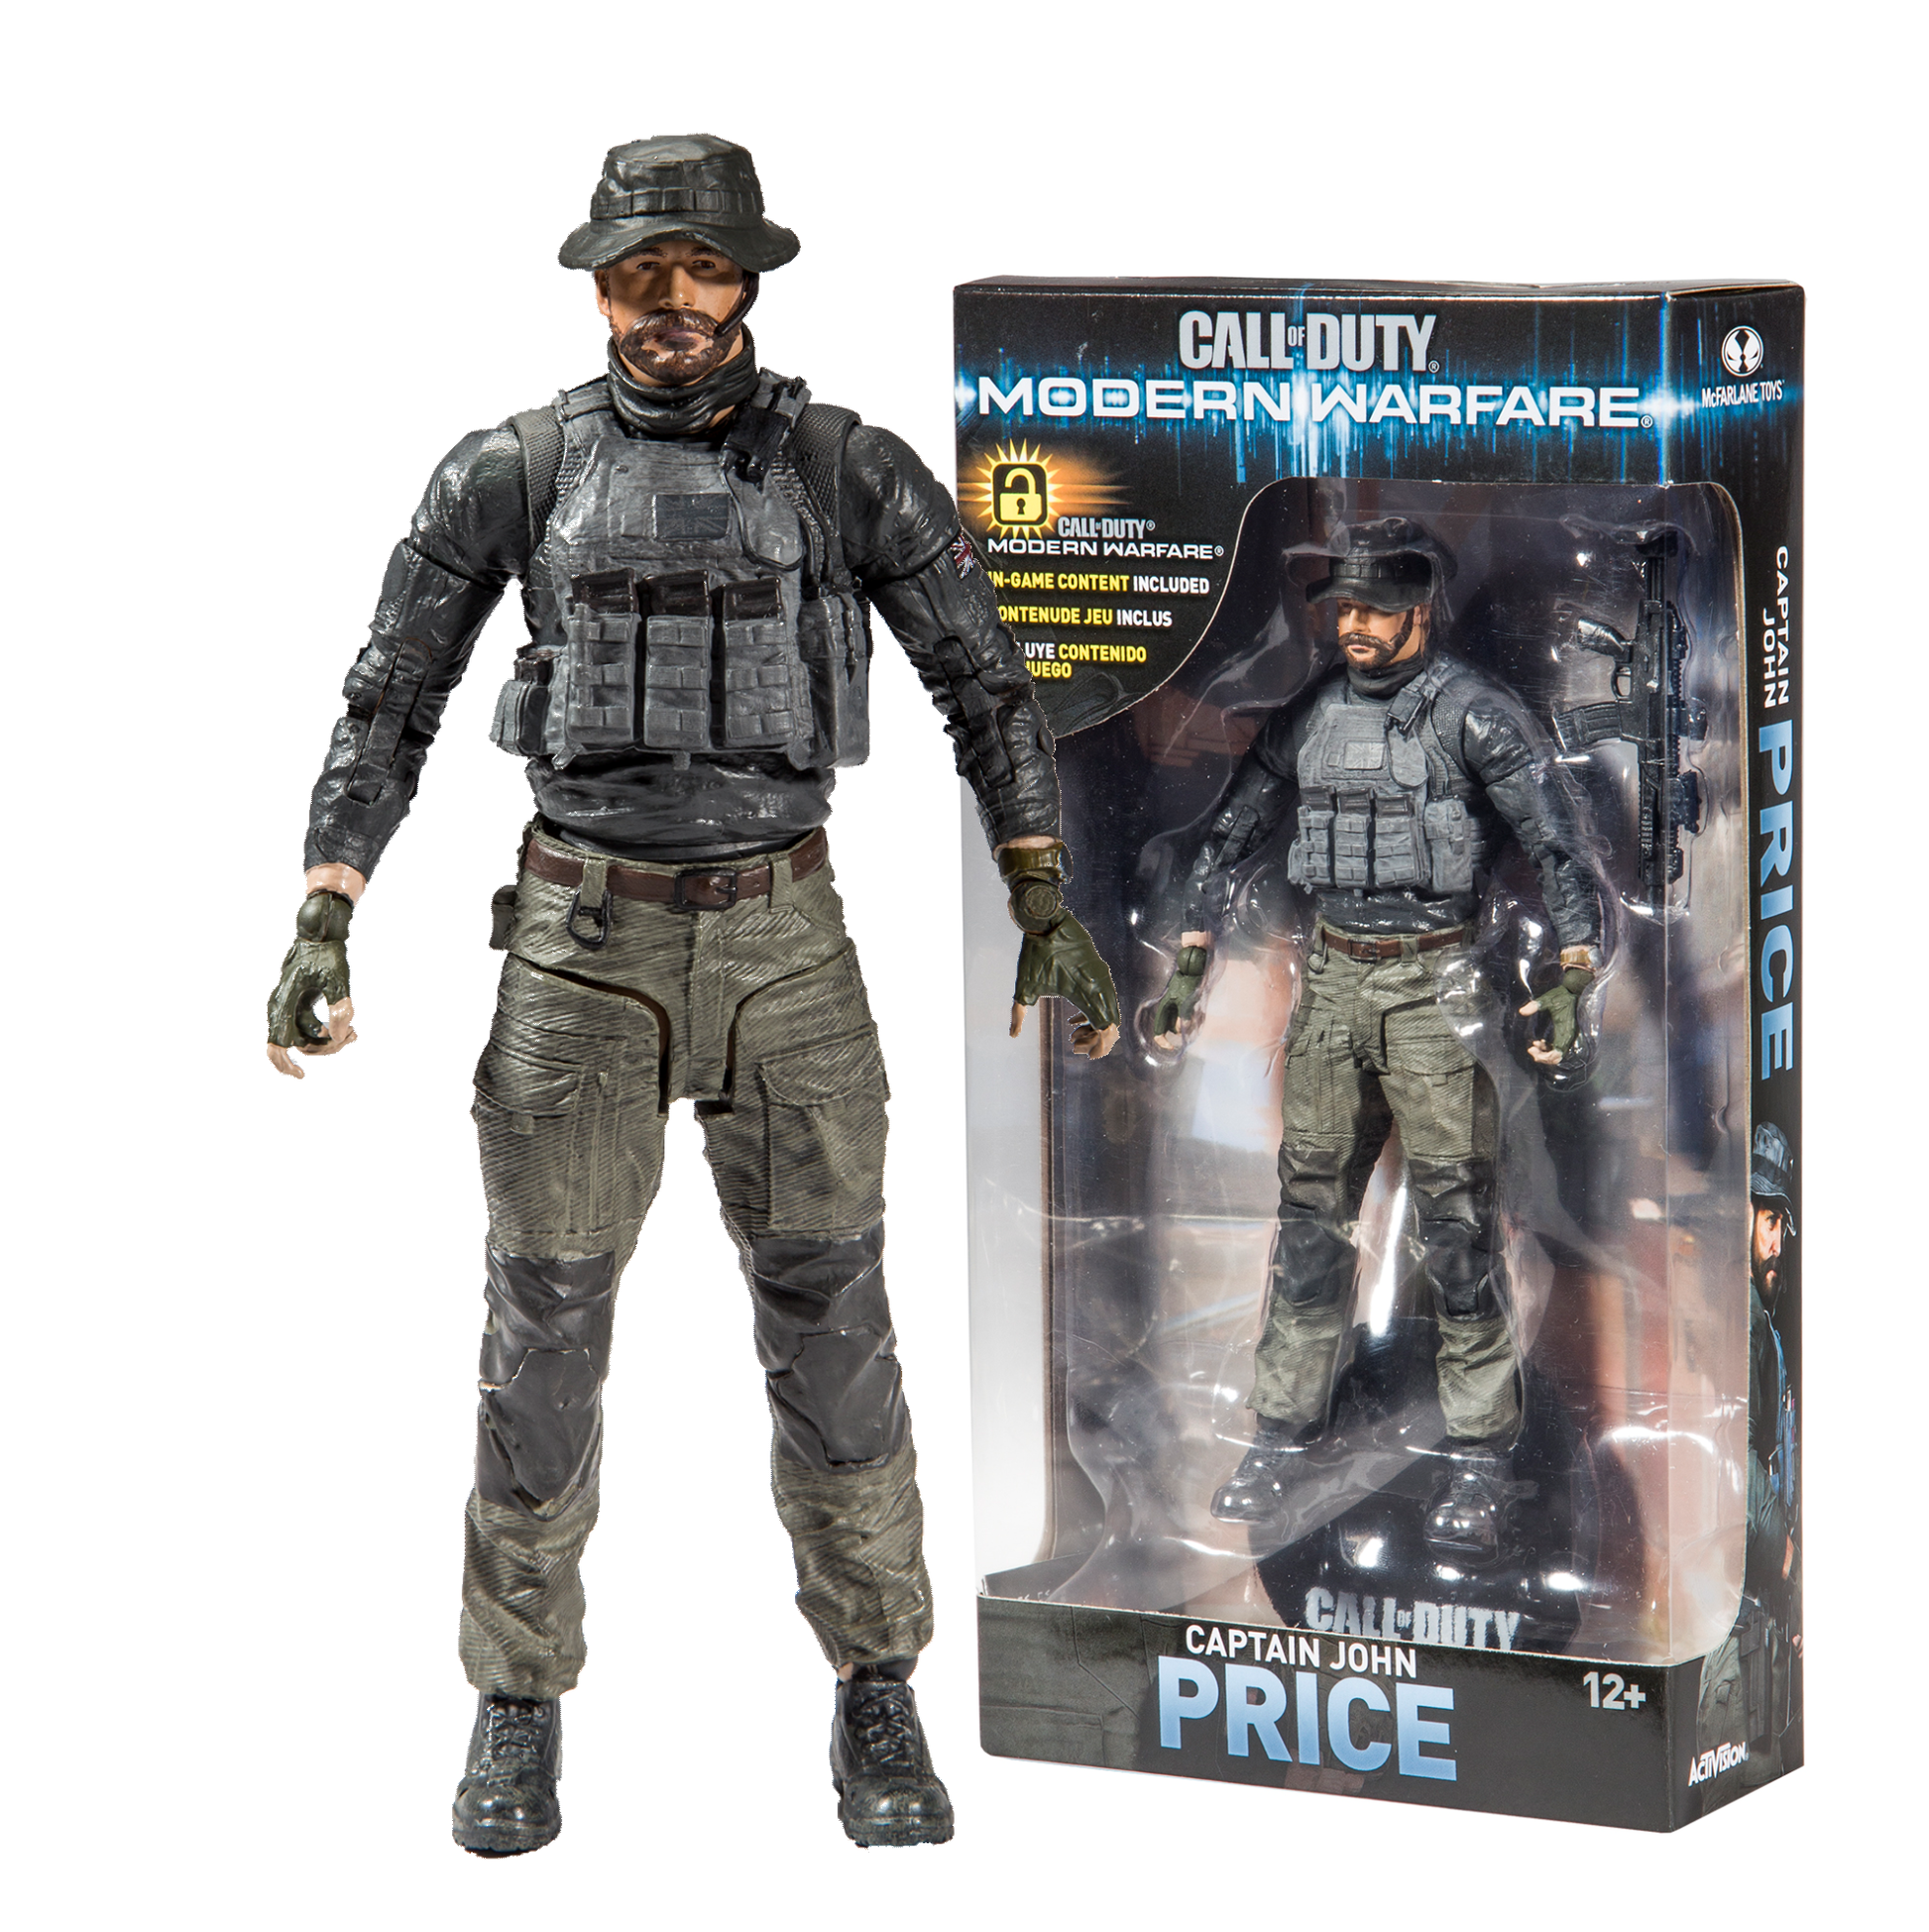 koolaz-ltd - Call of Duty - Captain John Price 7” Action Figure - McFarlane - Figure